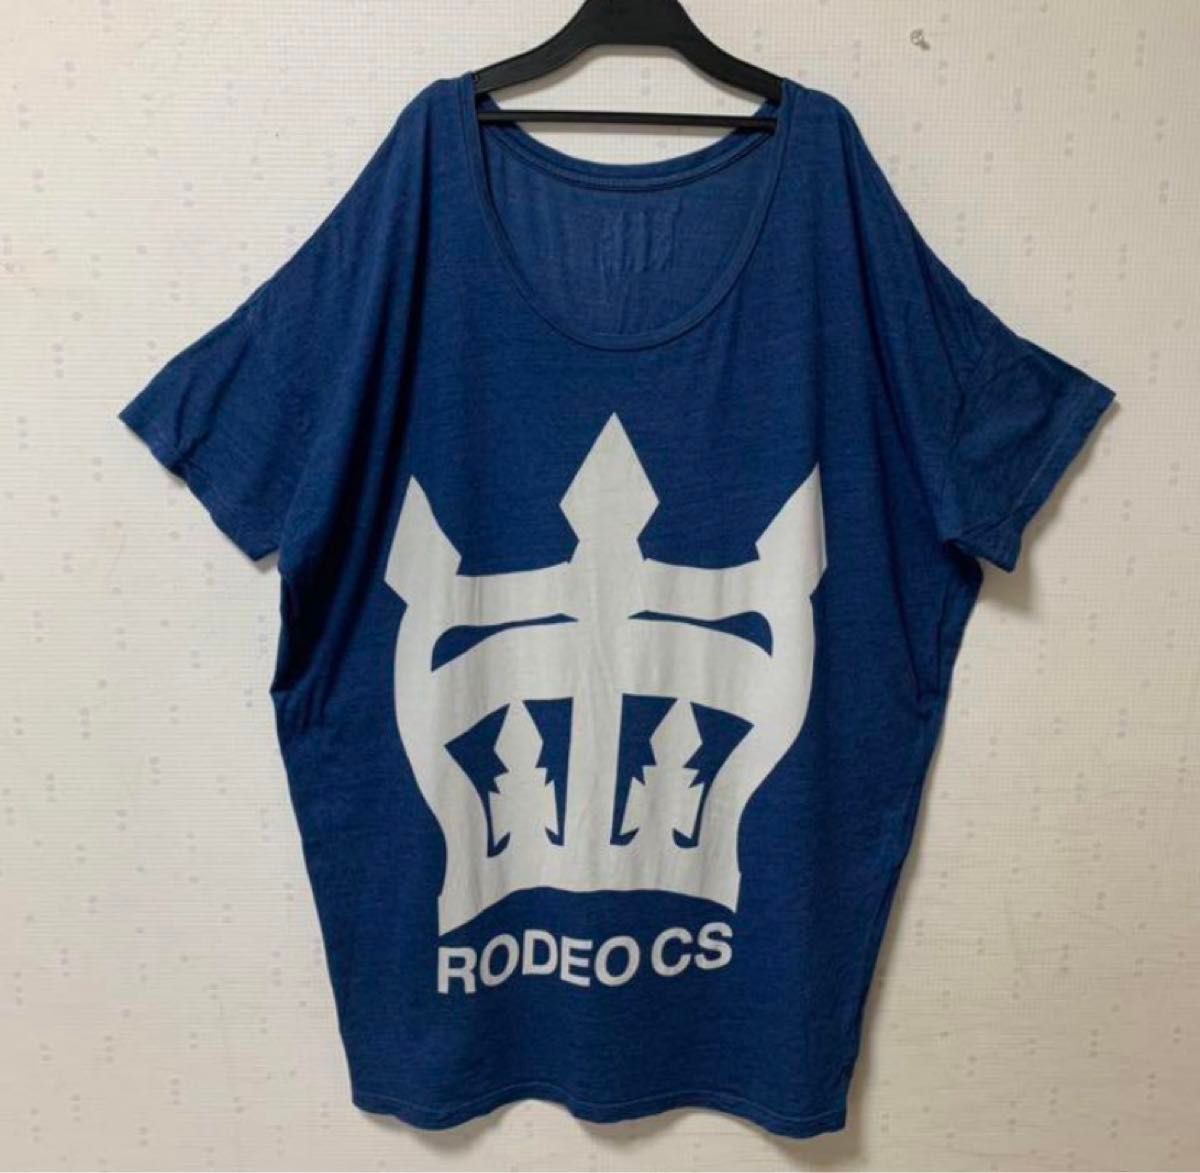 RODEO CROWNS  ビッククラウン Tシャツ(F)ロデオクラウンズ